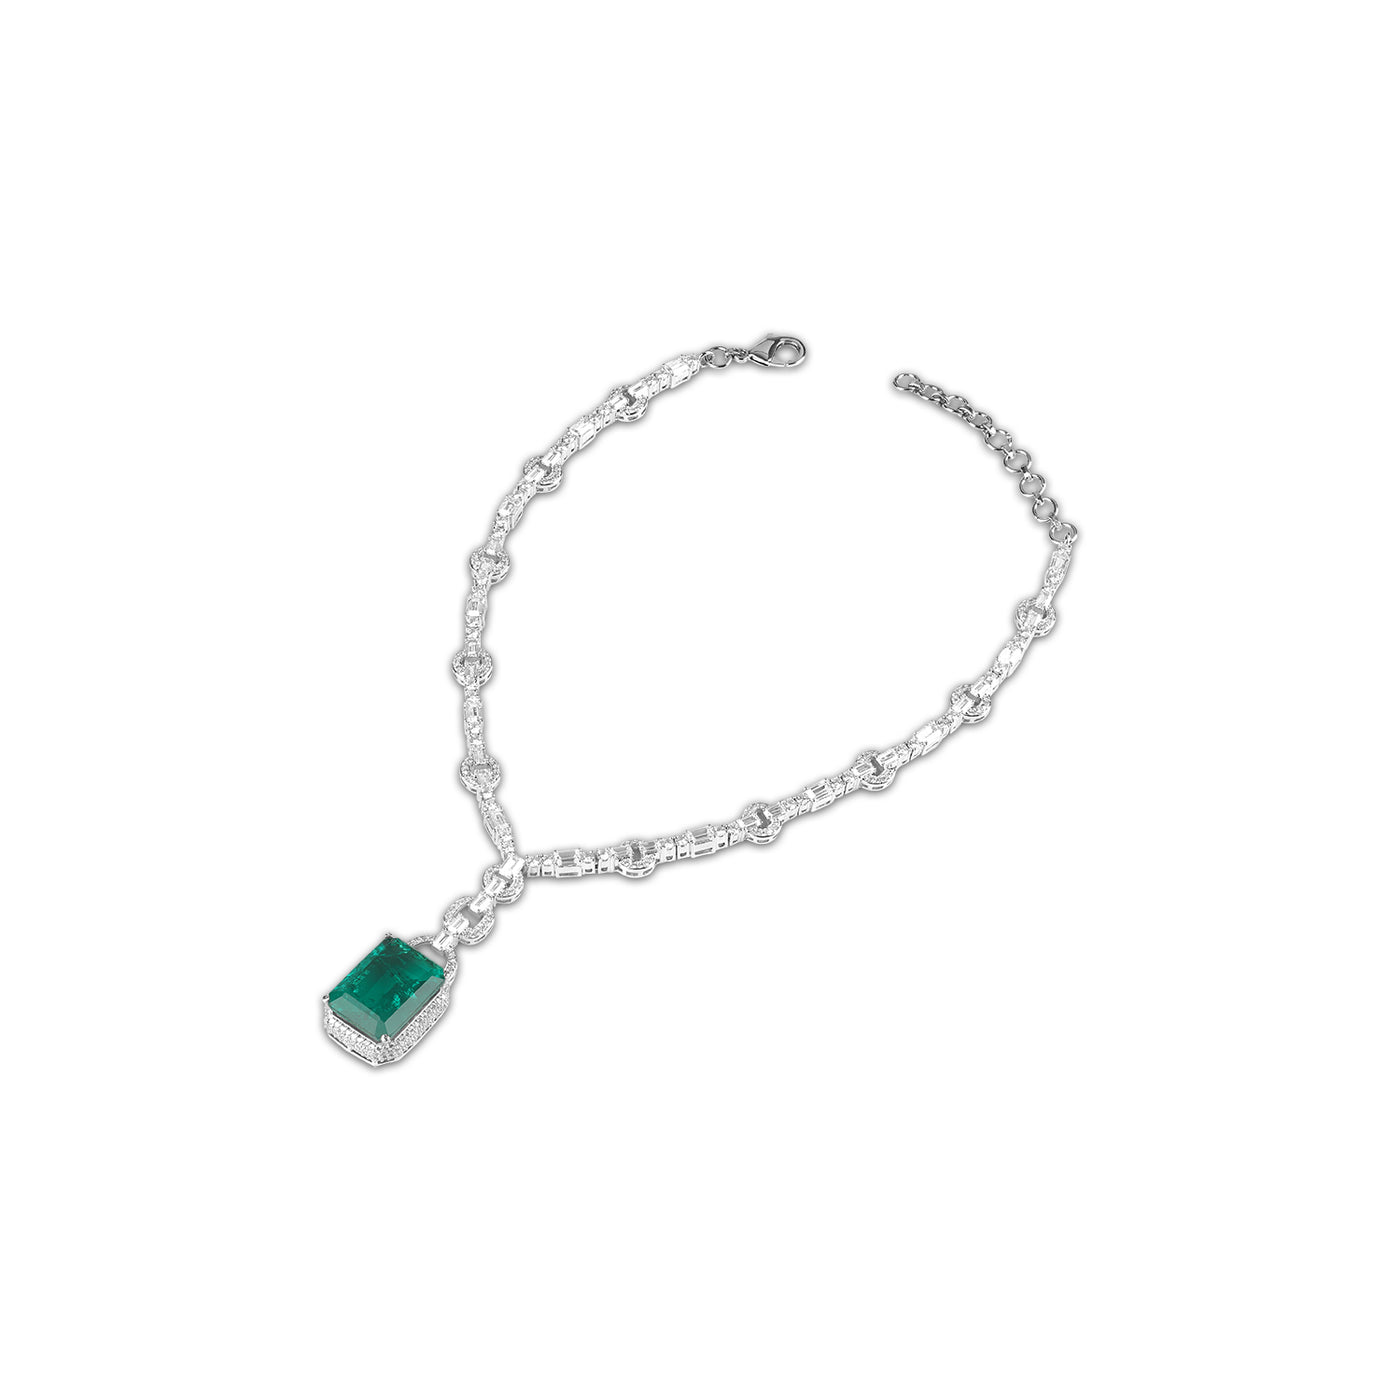 Iffat - Cubic zirconia necklace set